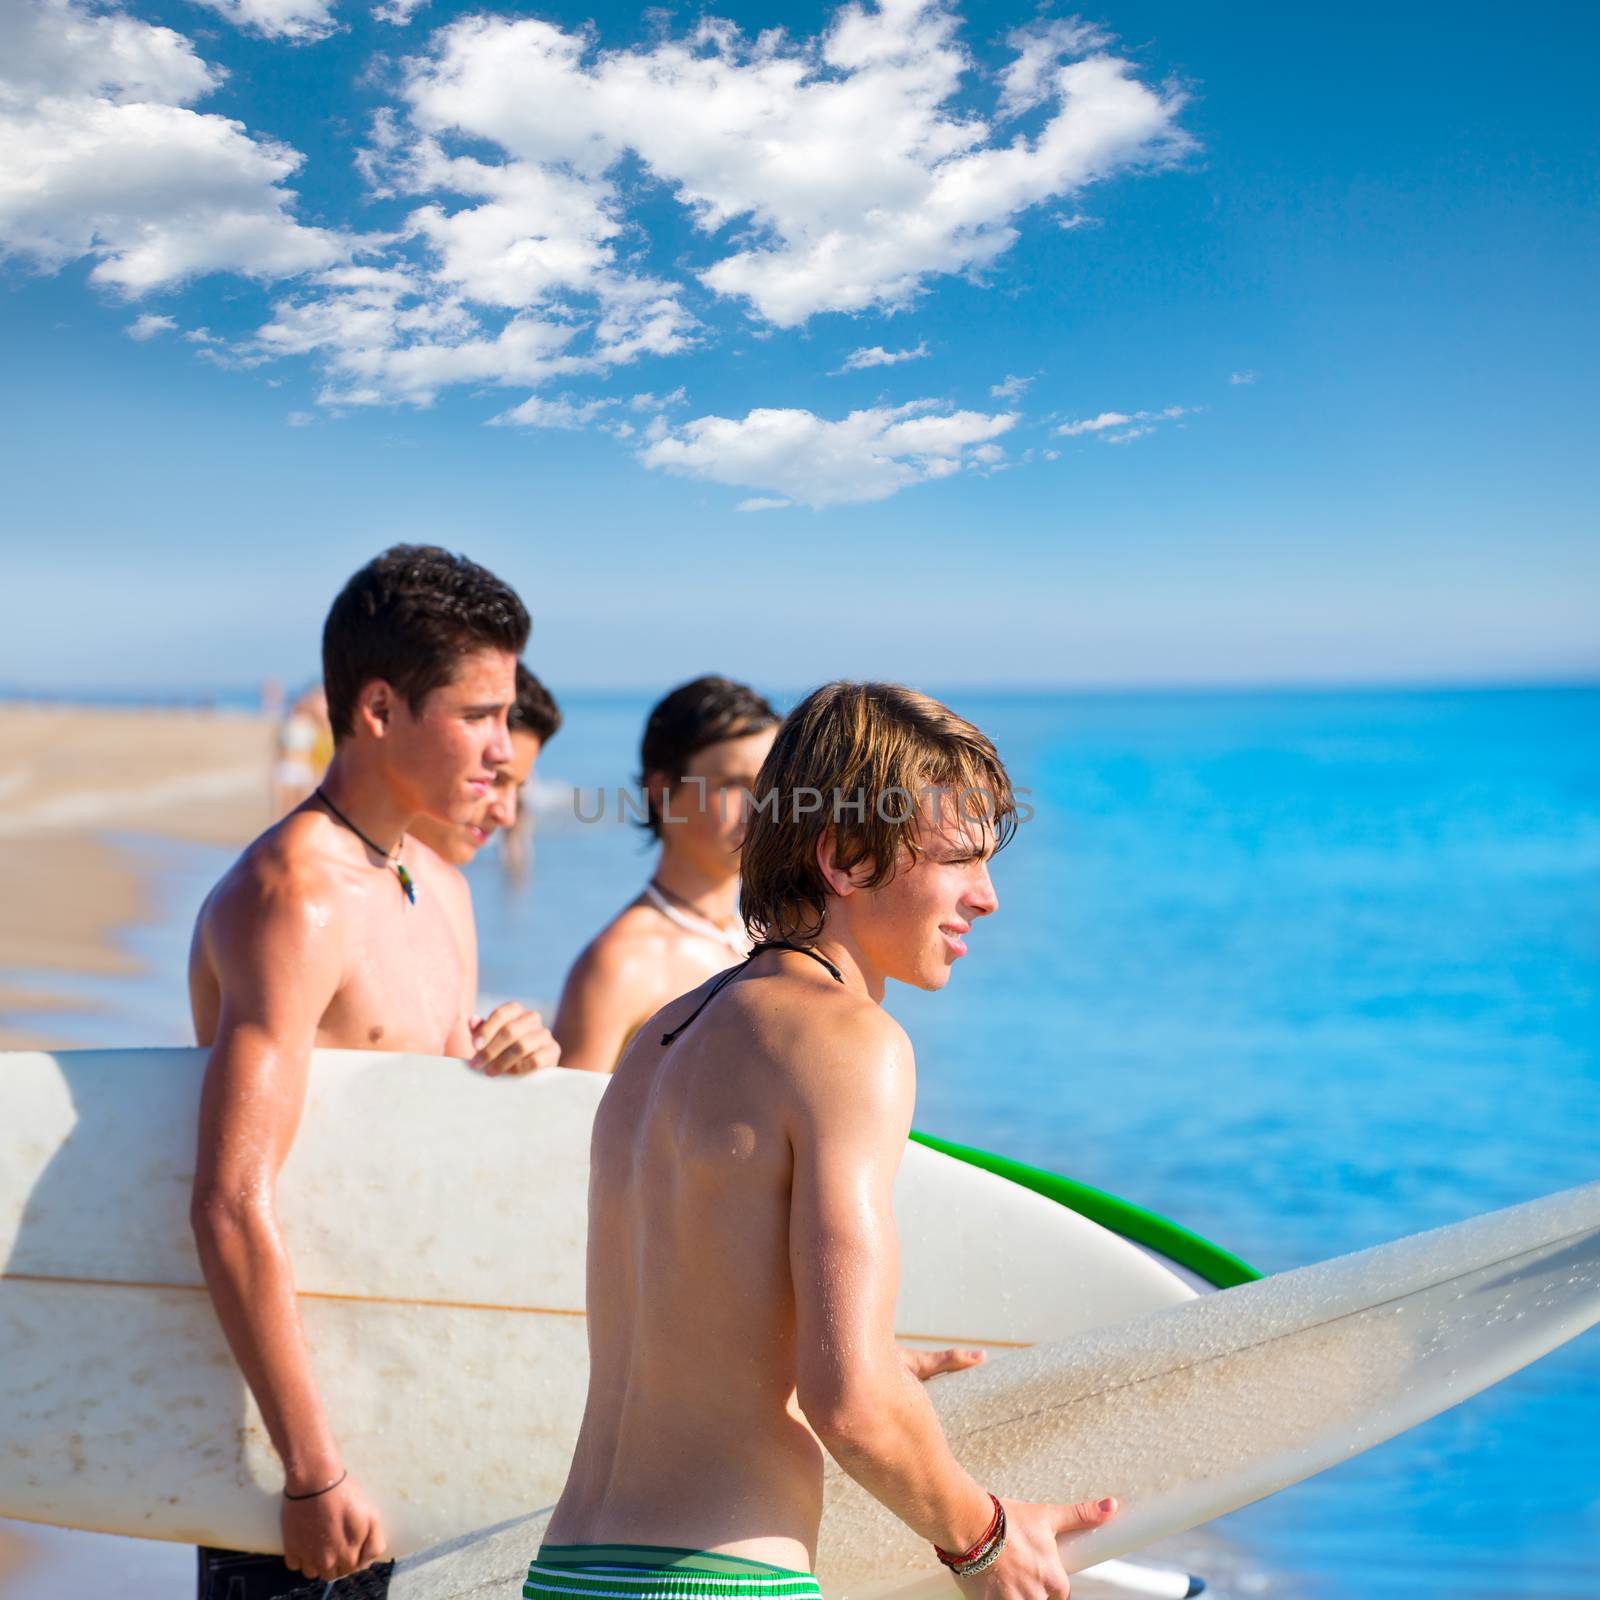 Surfer teen boys talking on beach shore by lunamarina